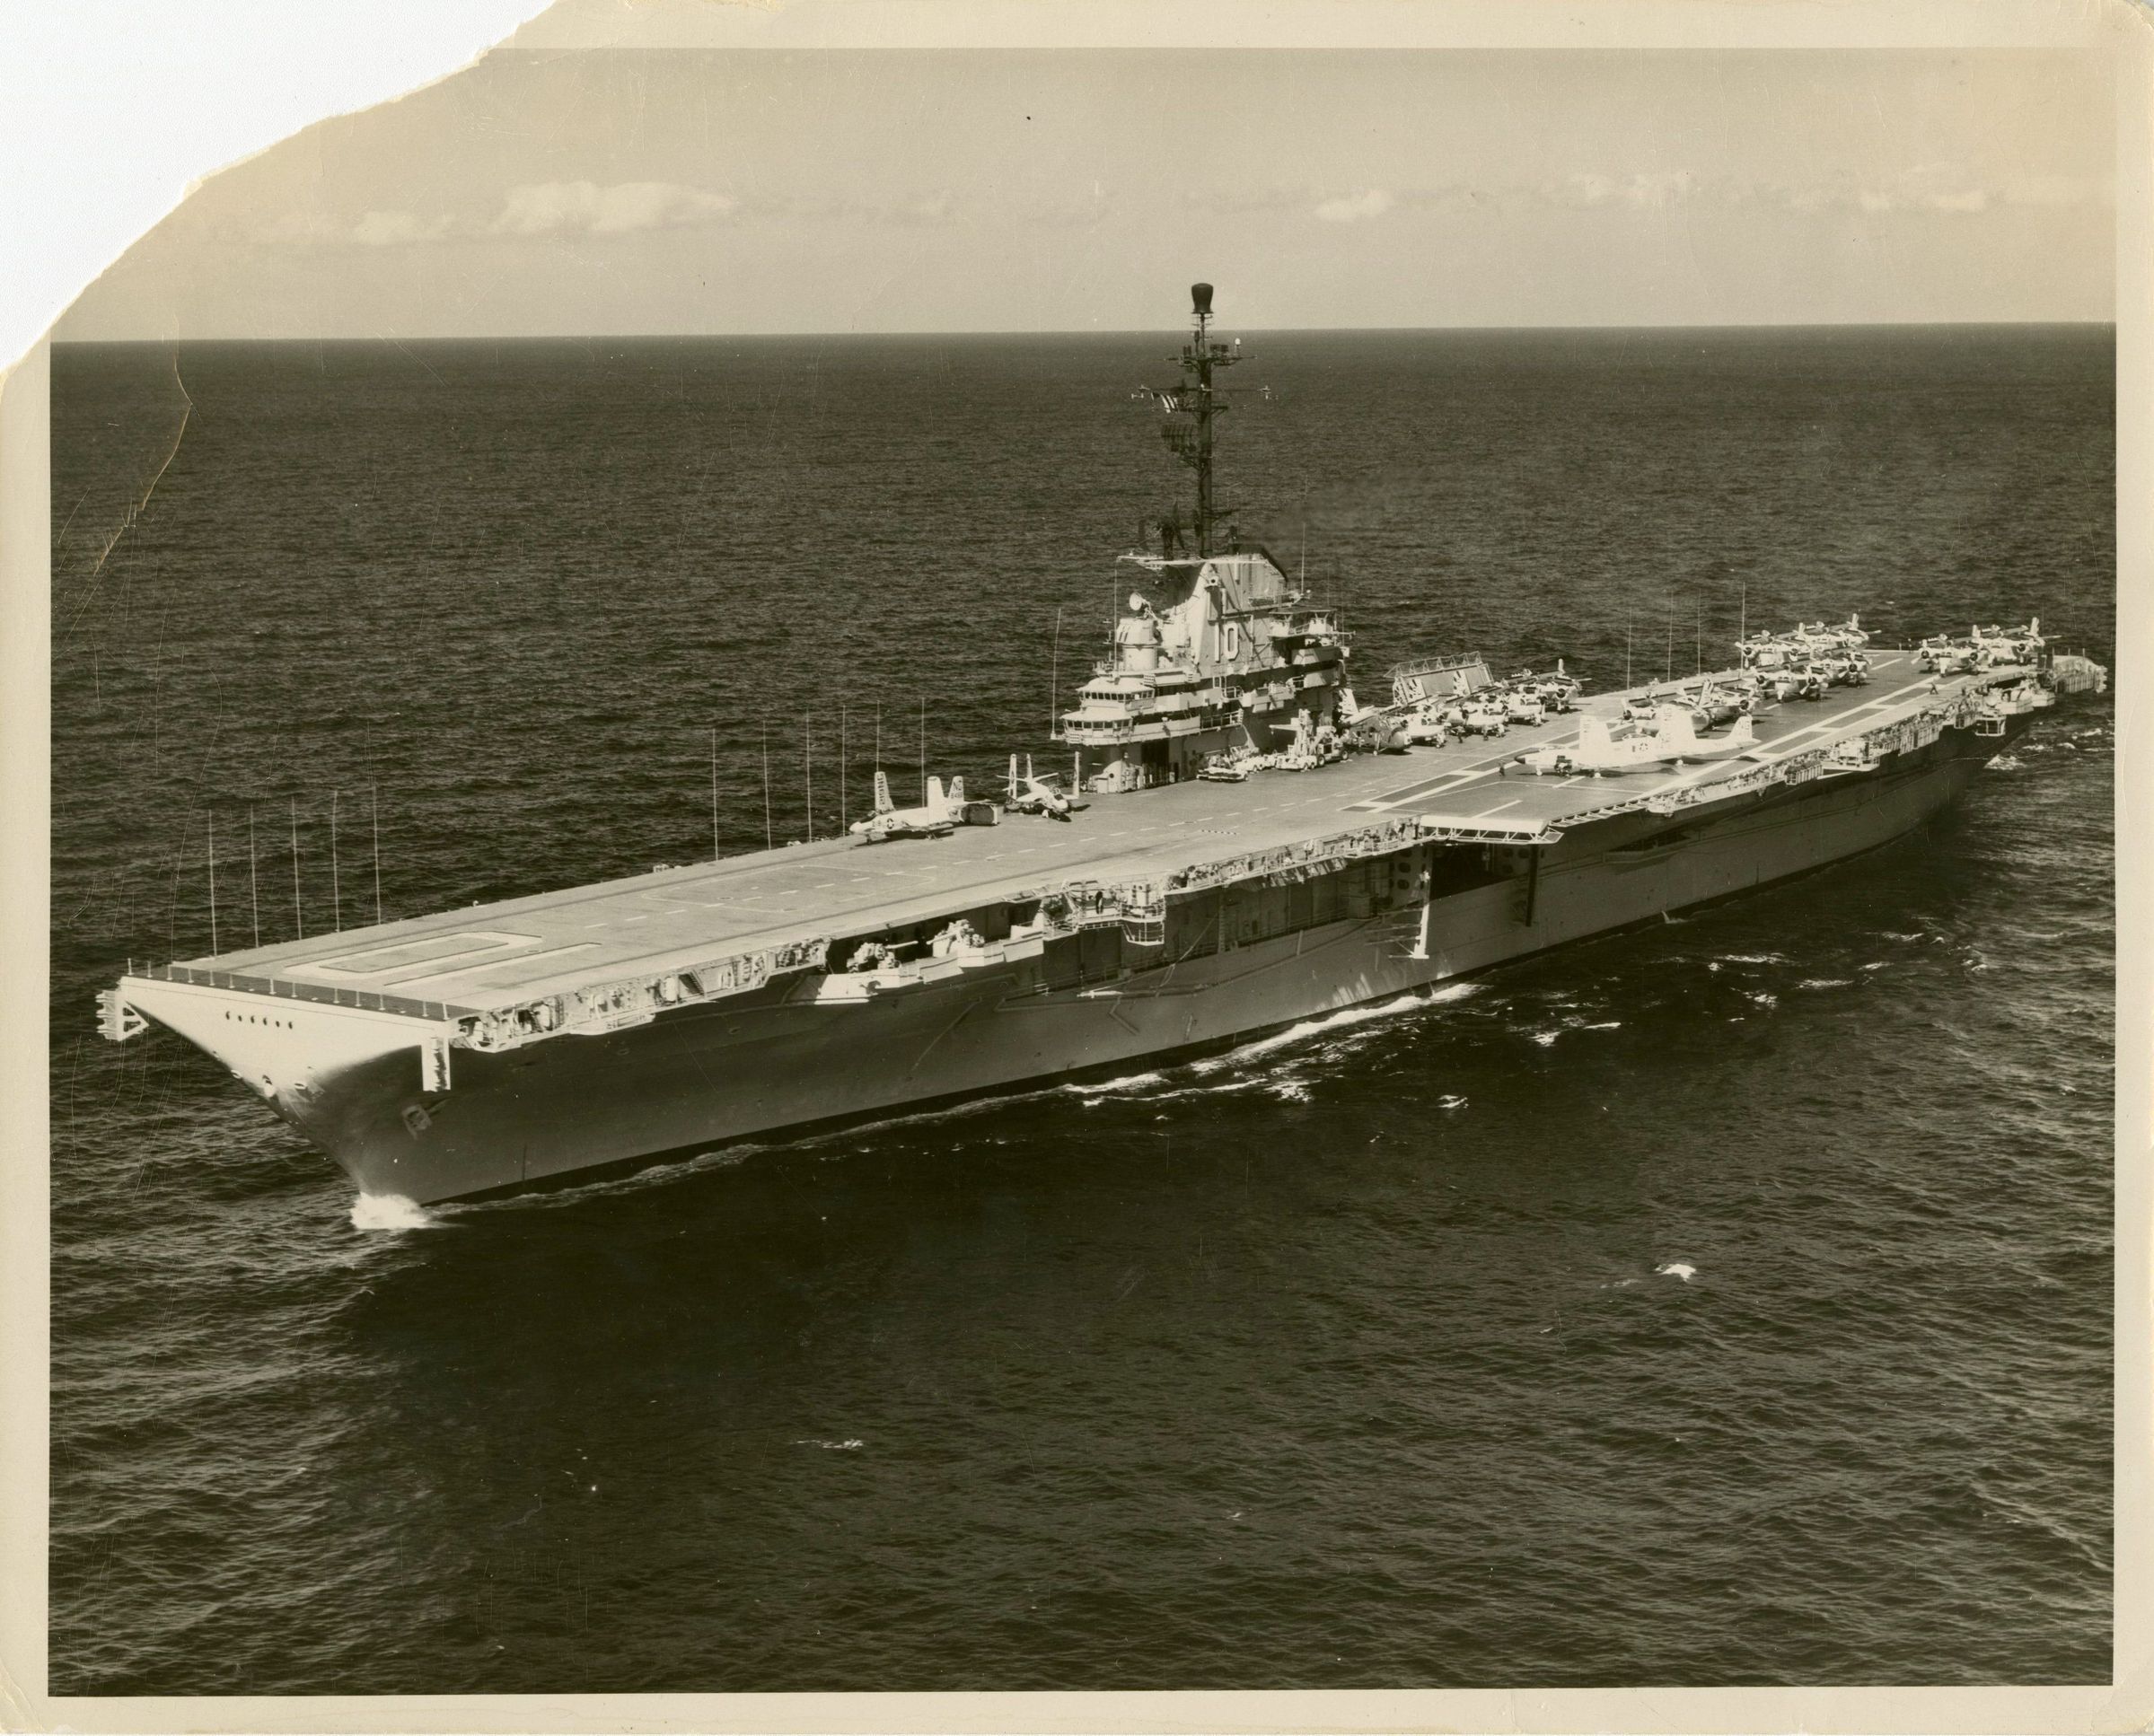 Primary Image of USS Yorktown (CVS-10)